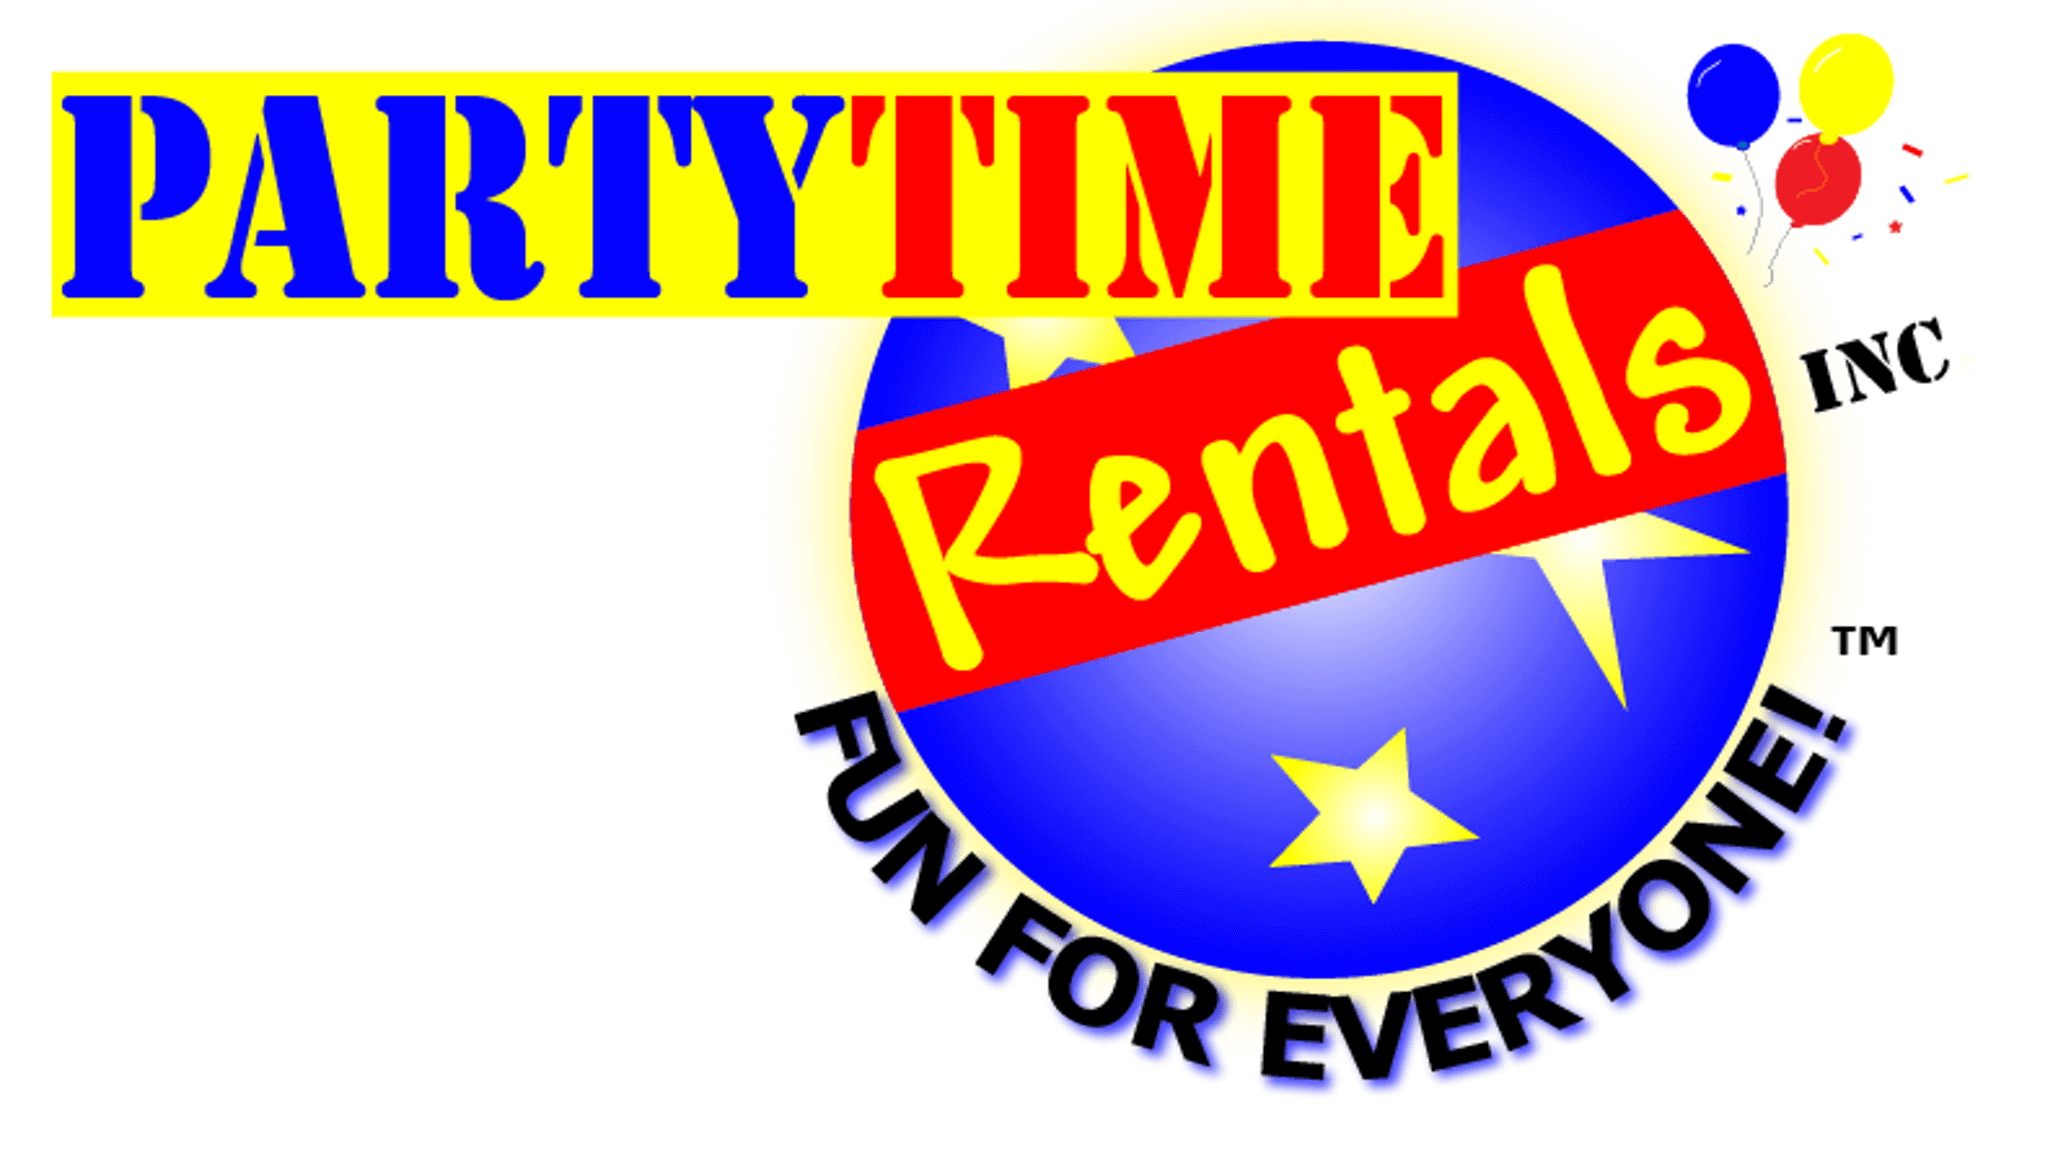 Fryer - Party Time Rental